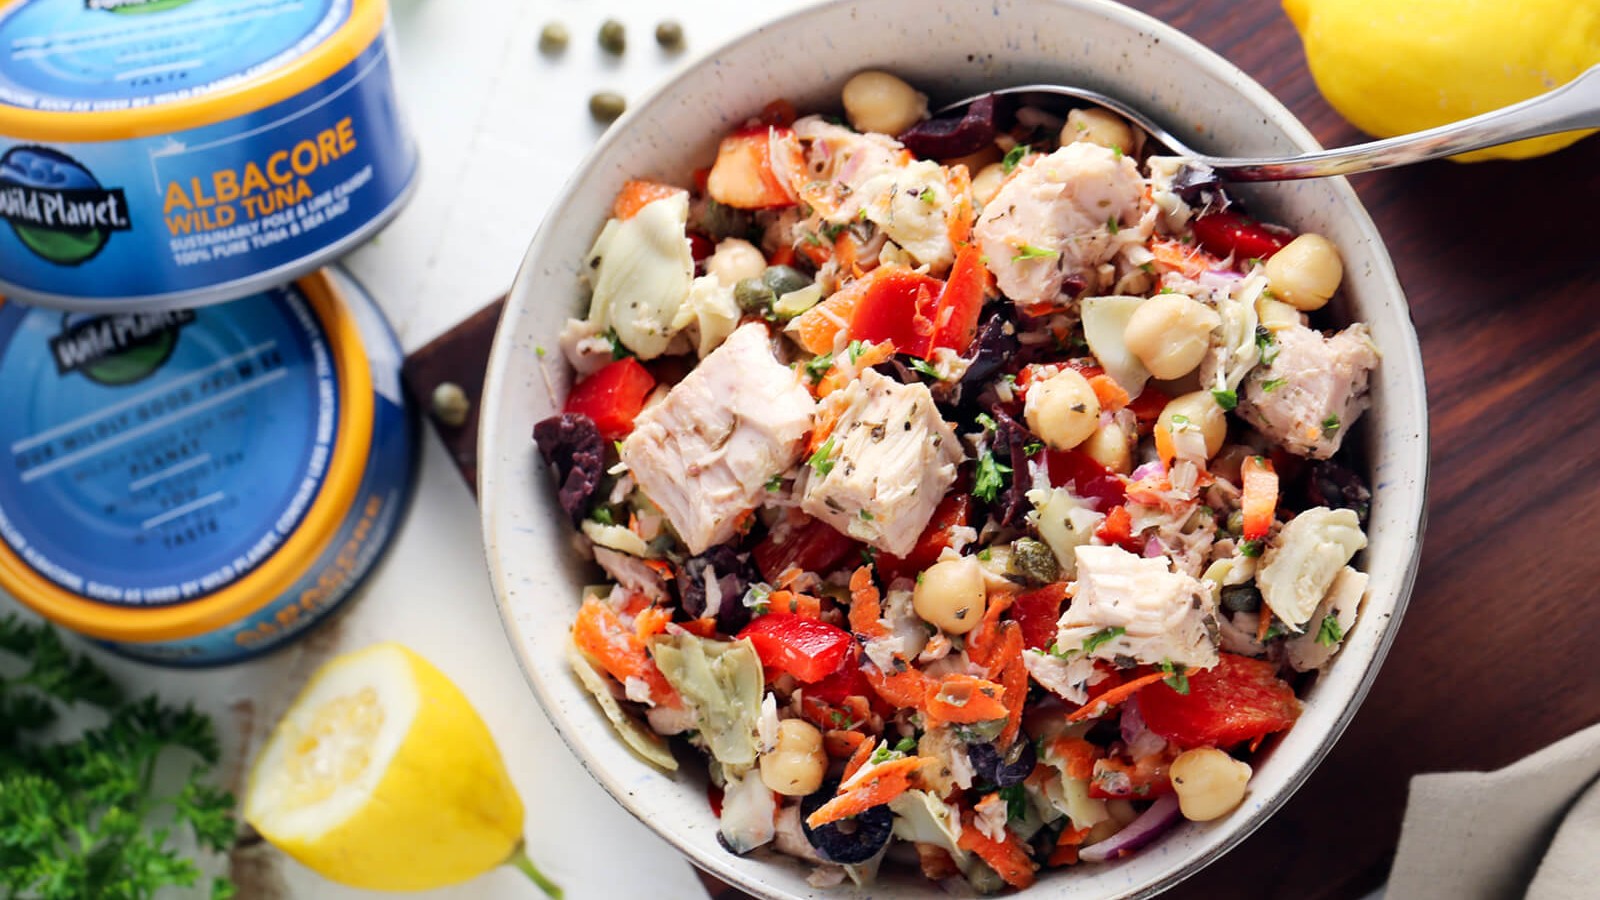 Image of Wild Planet Mediterranean Tuna Salad